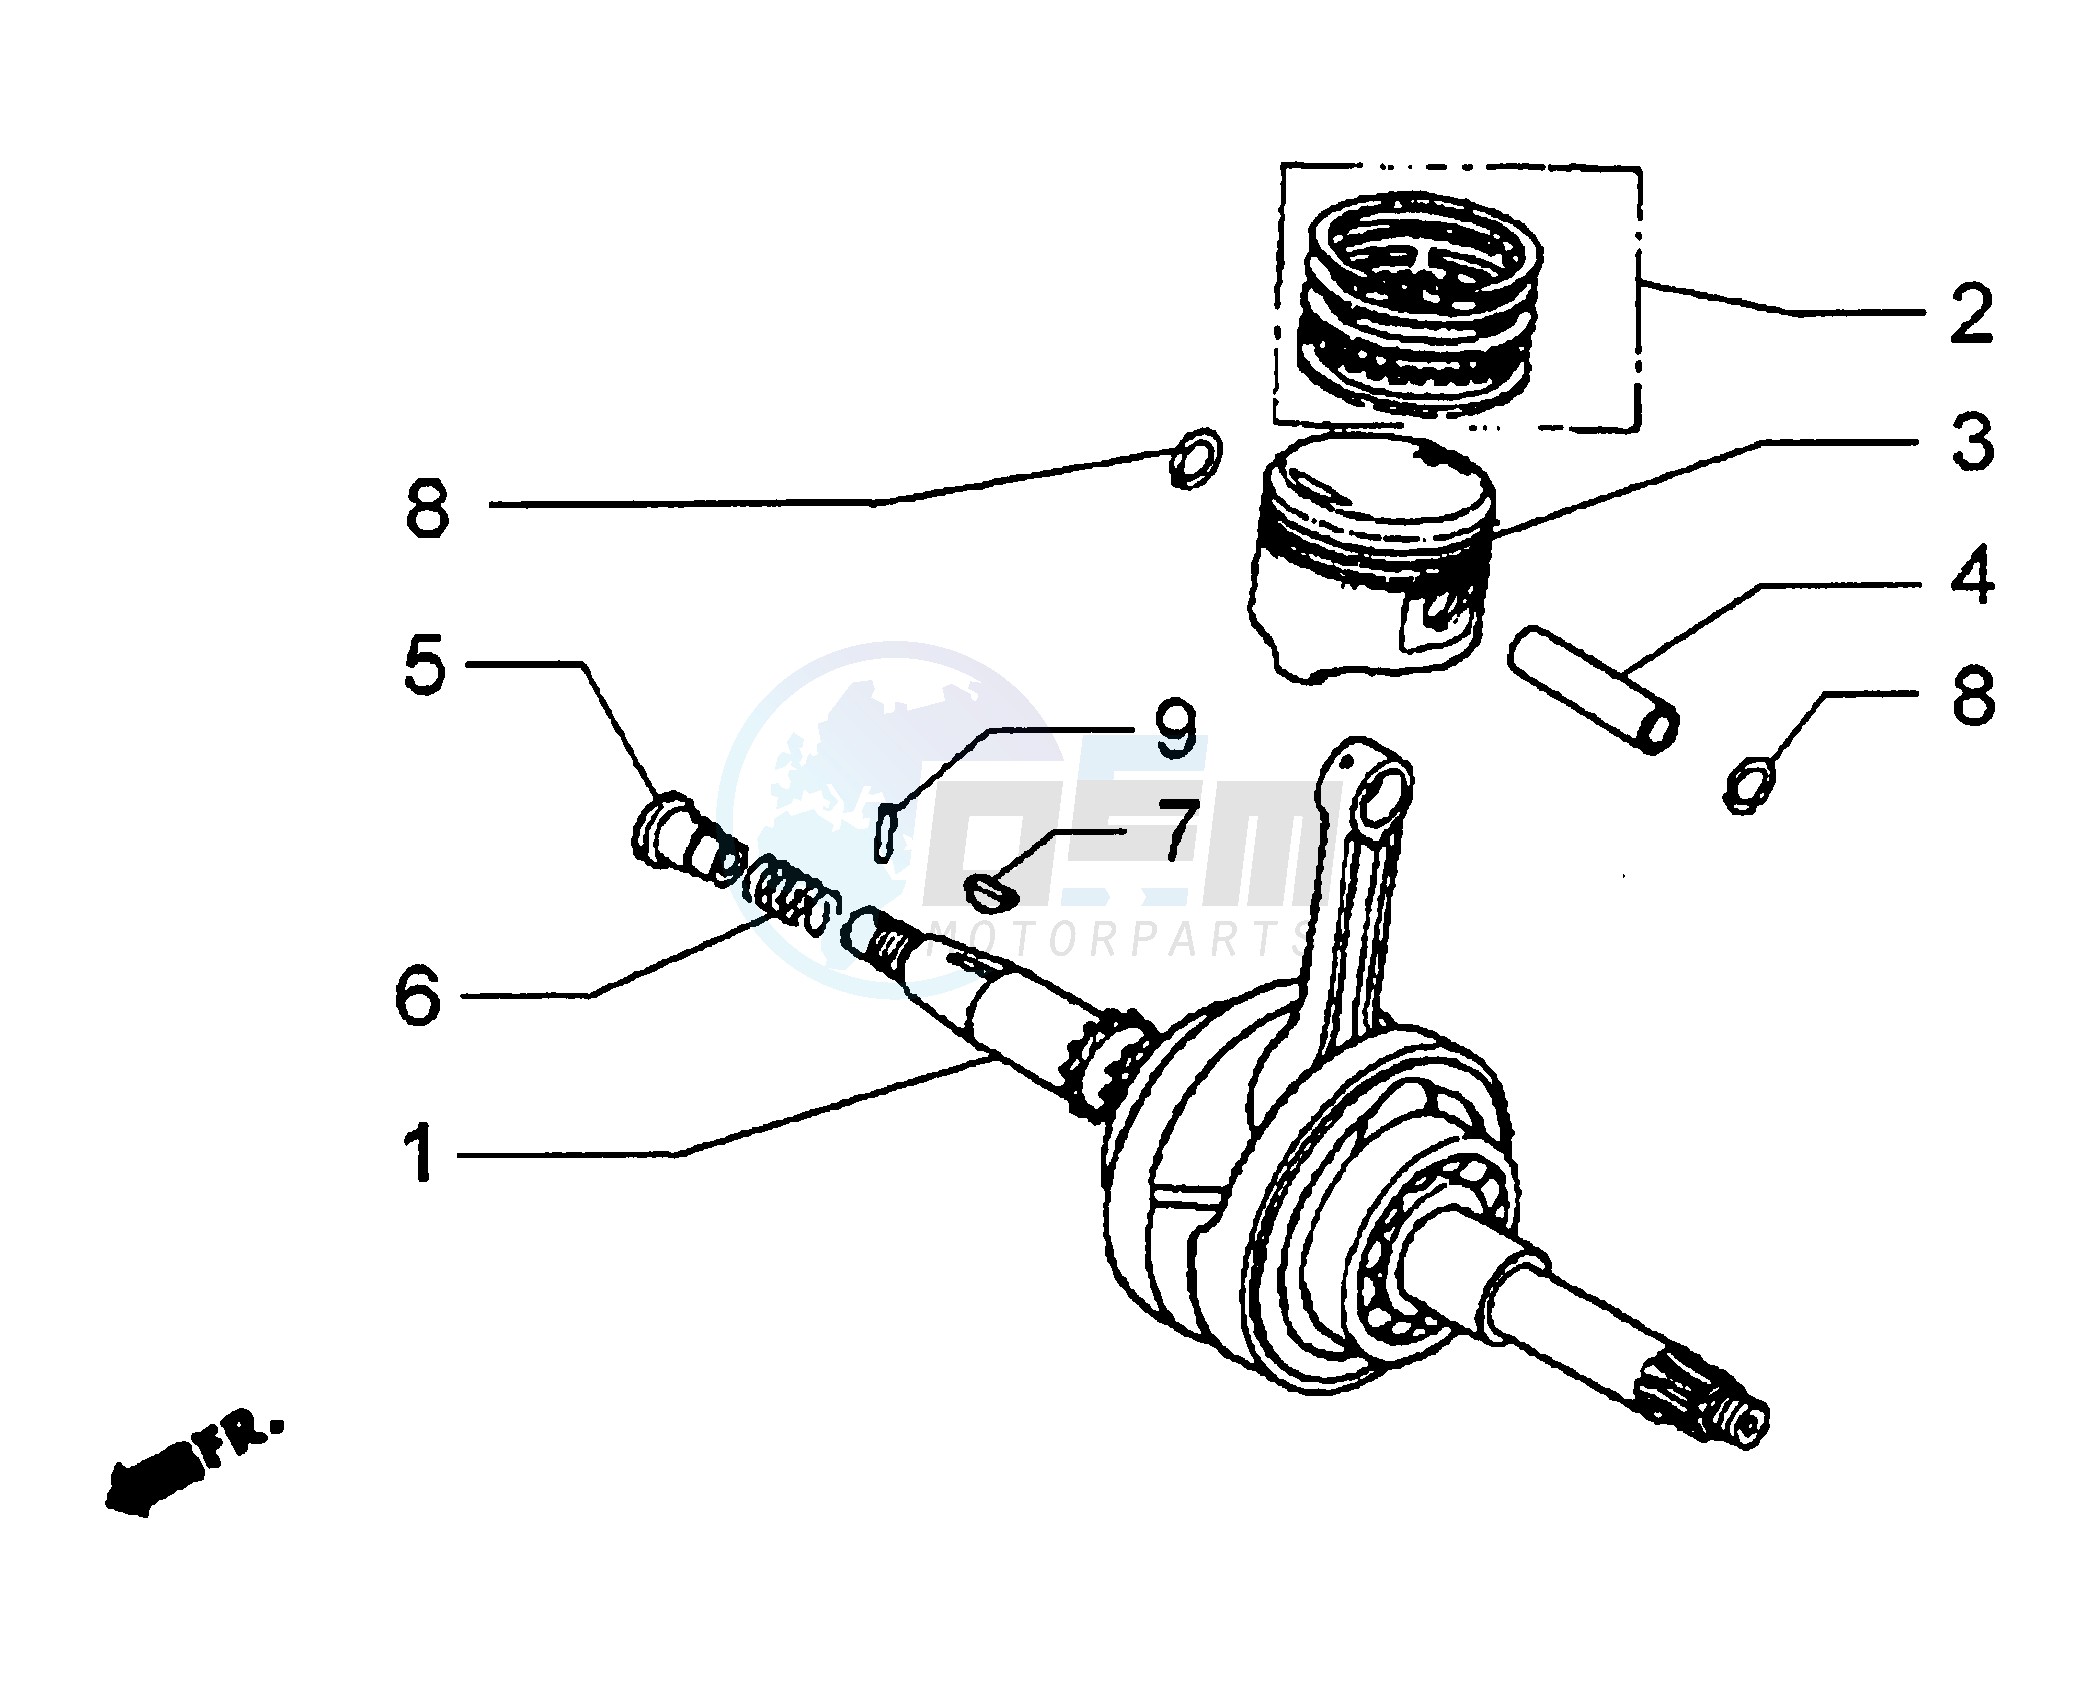 Drive shaft - Cylinder - Piston blueprint